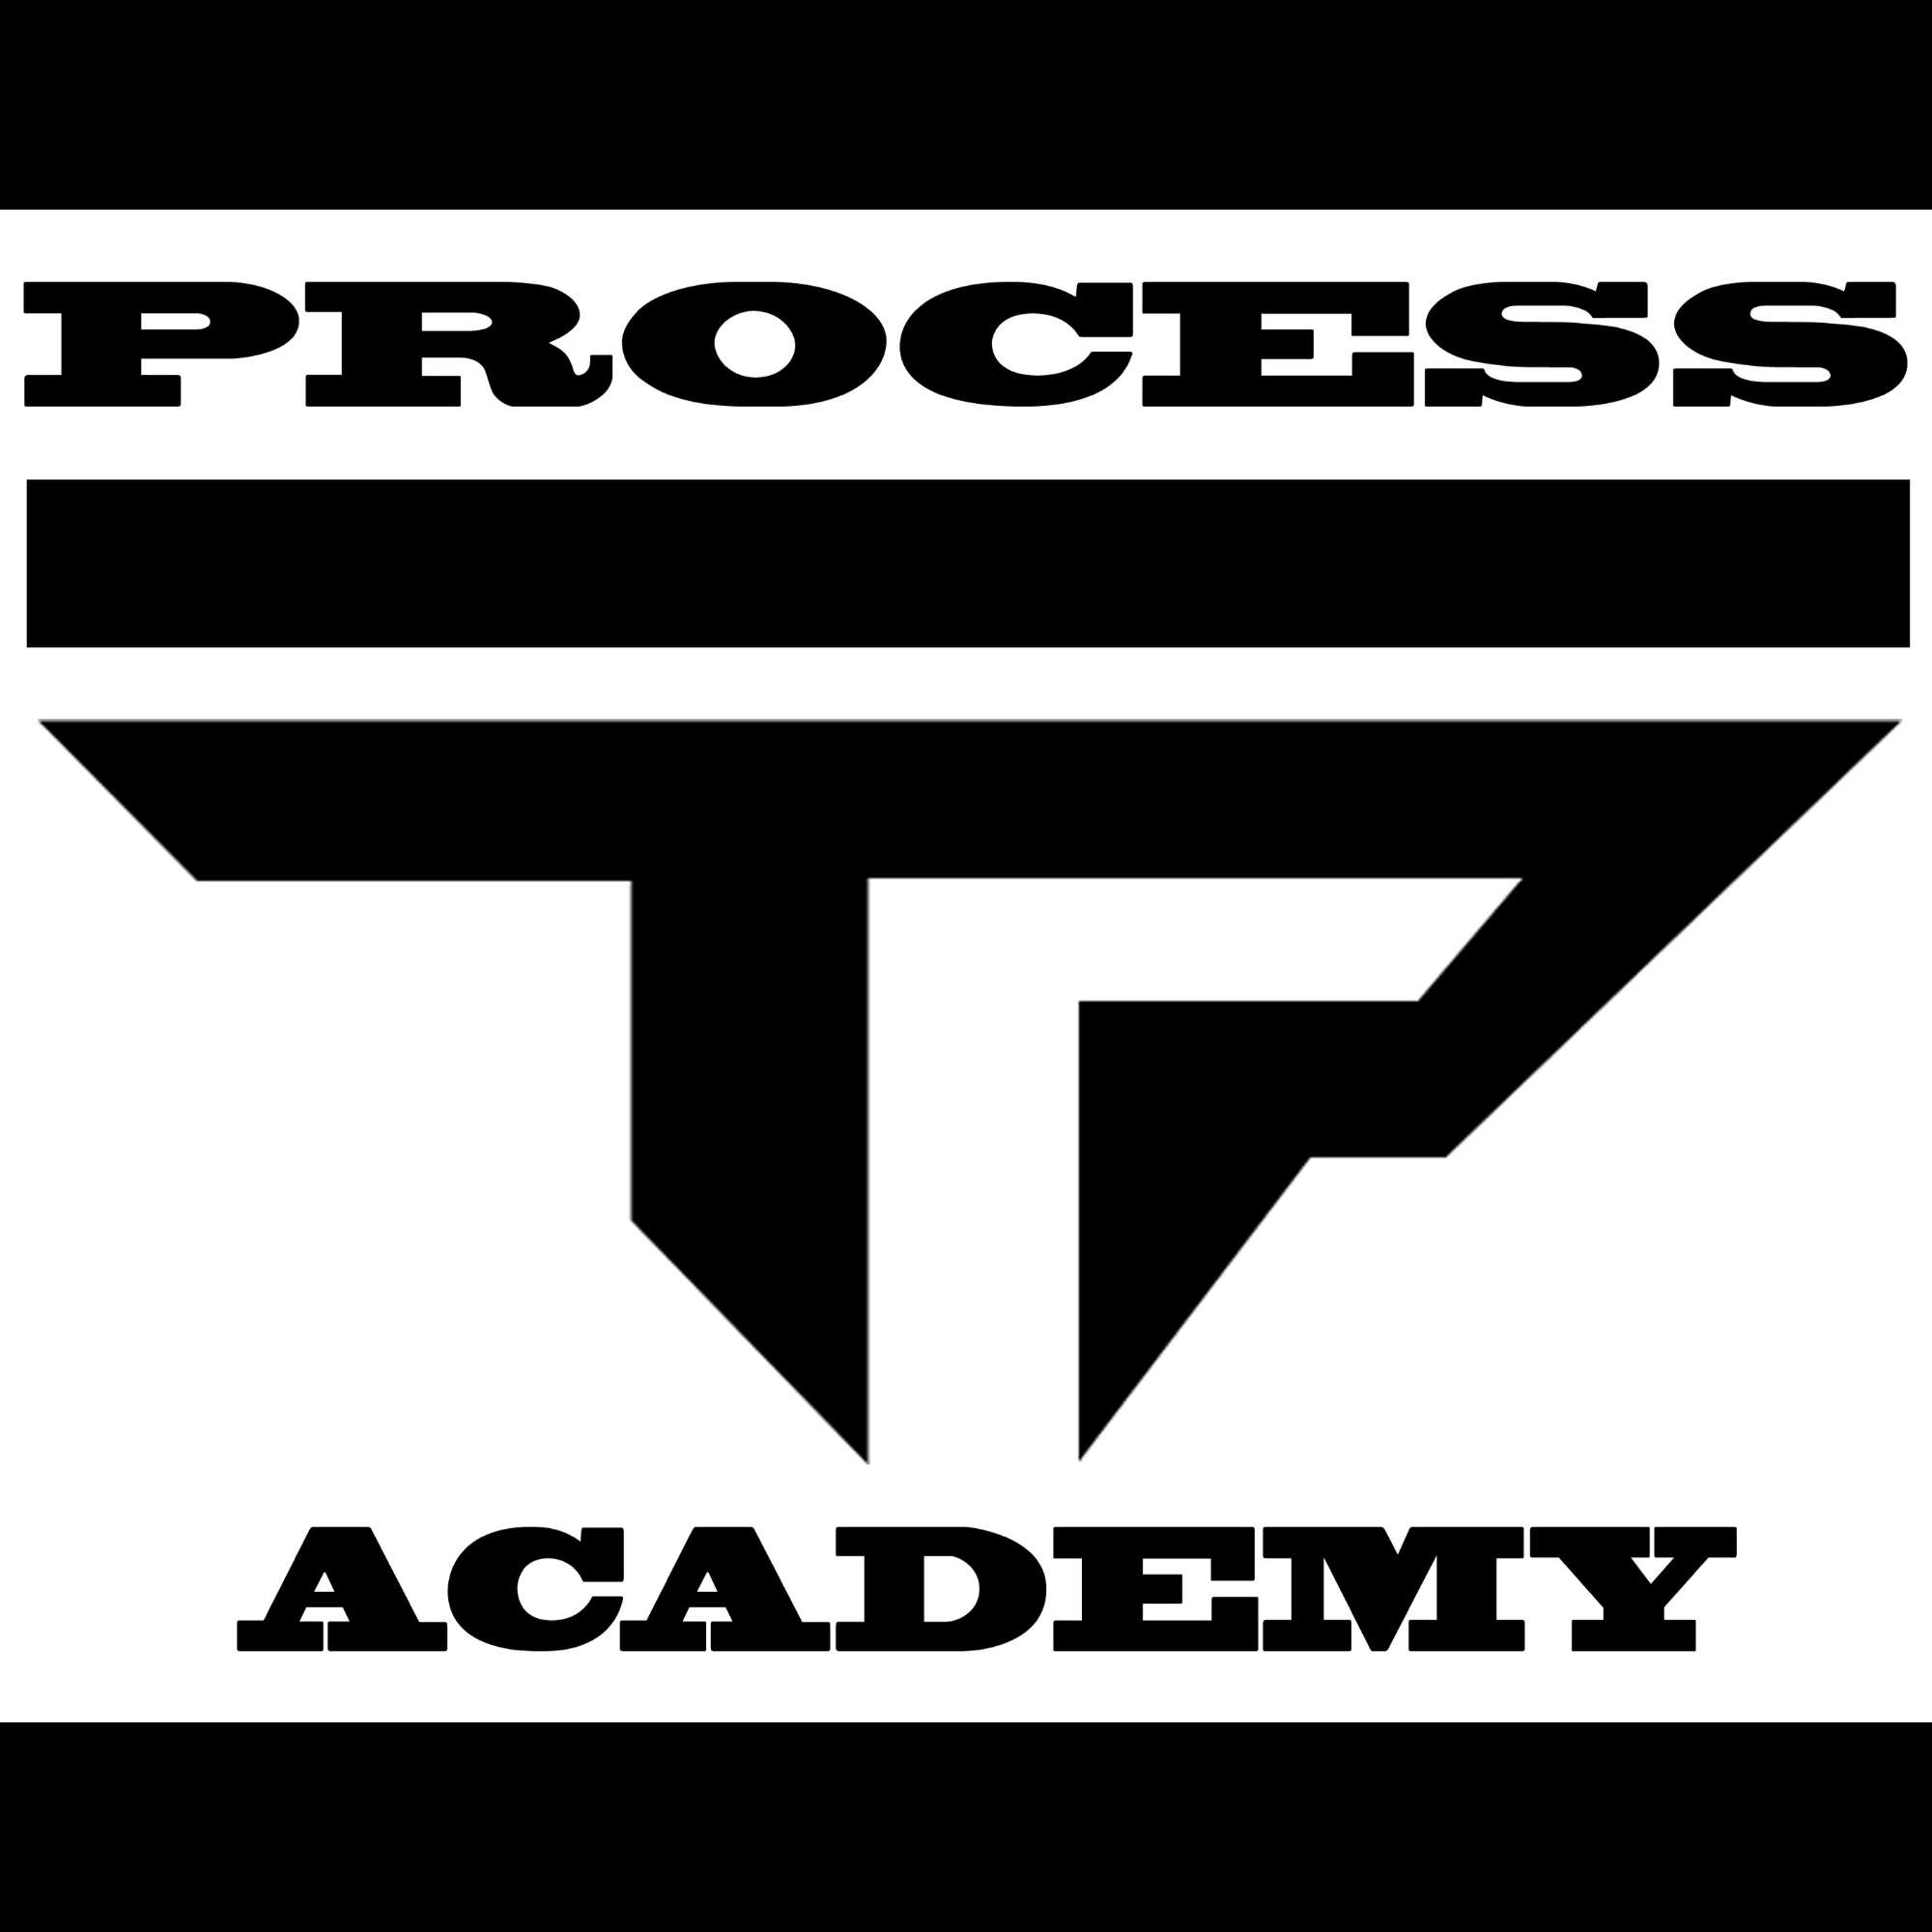 Organization logo for The Process Academy